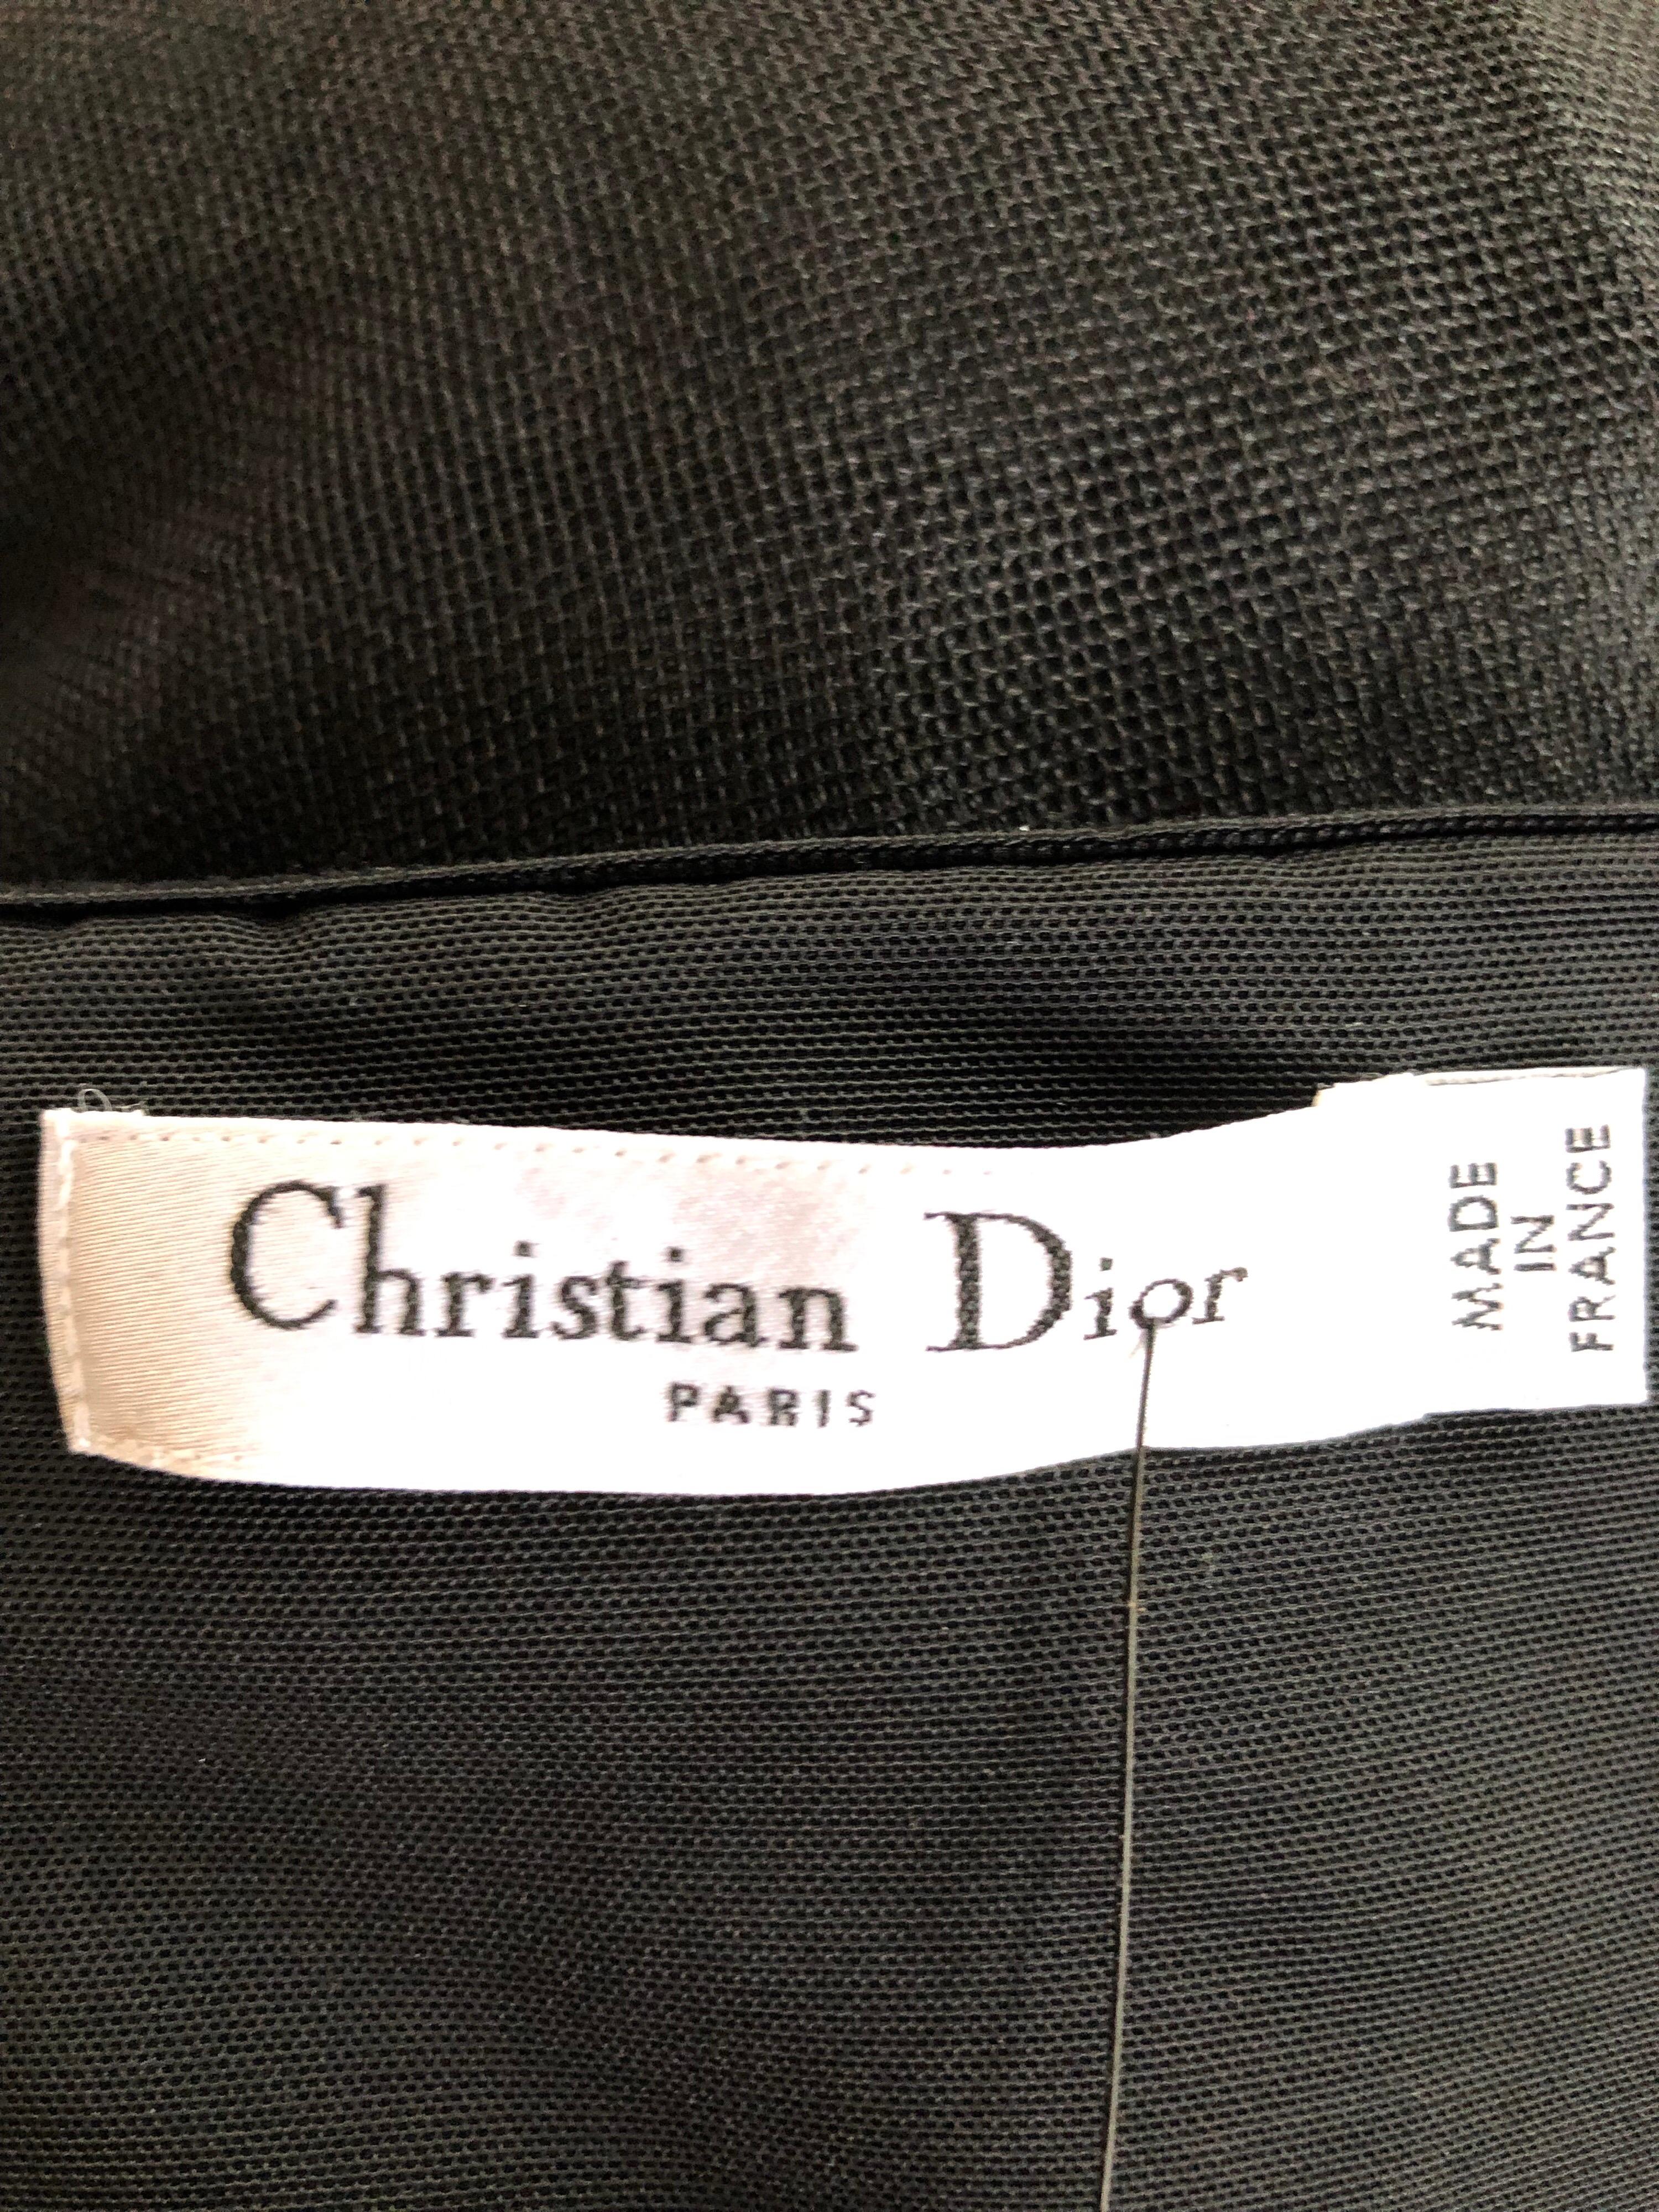 Christian Dior by John Galliano c. 2003 Embellished Black Dress 2